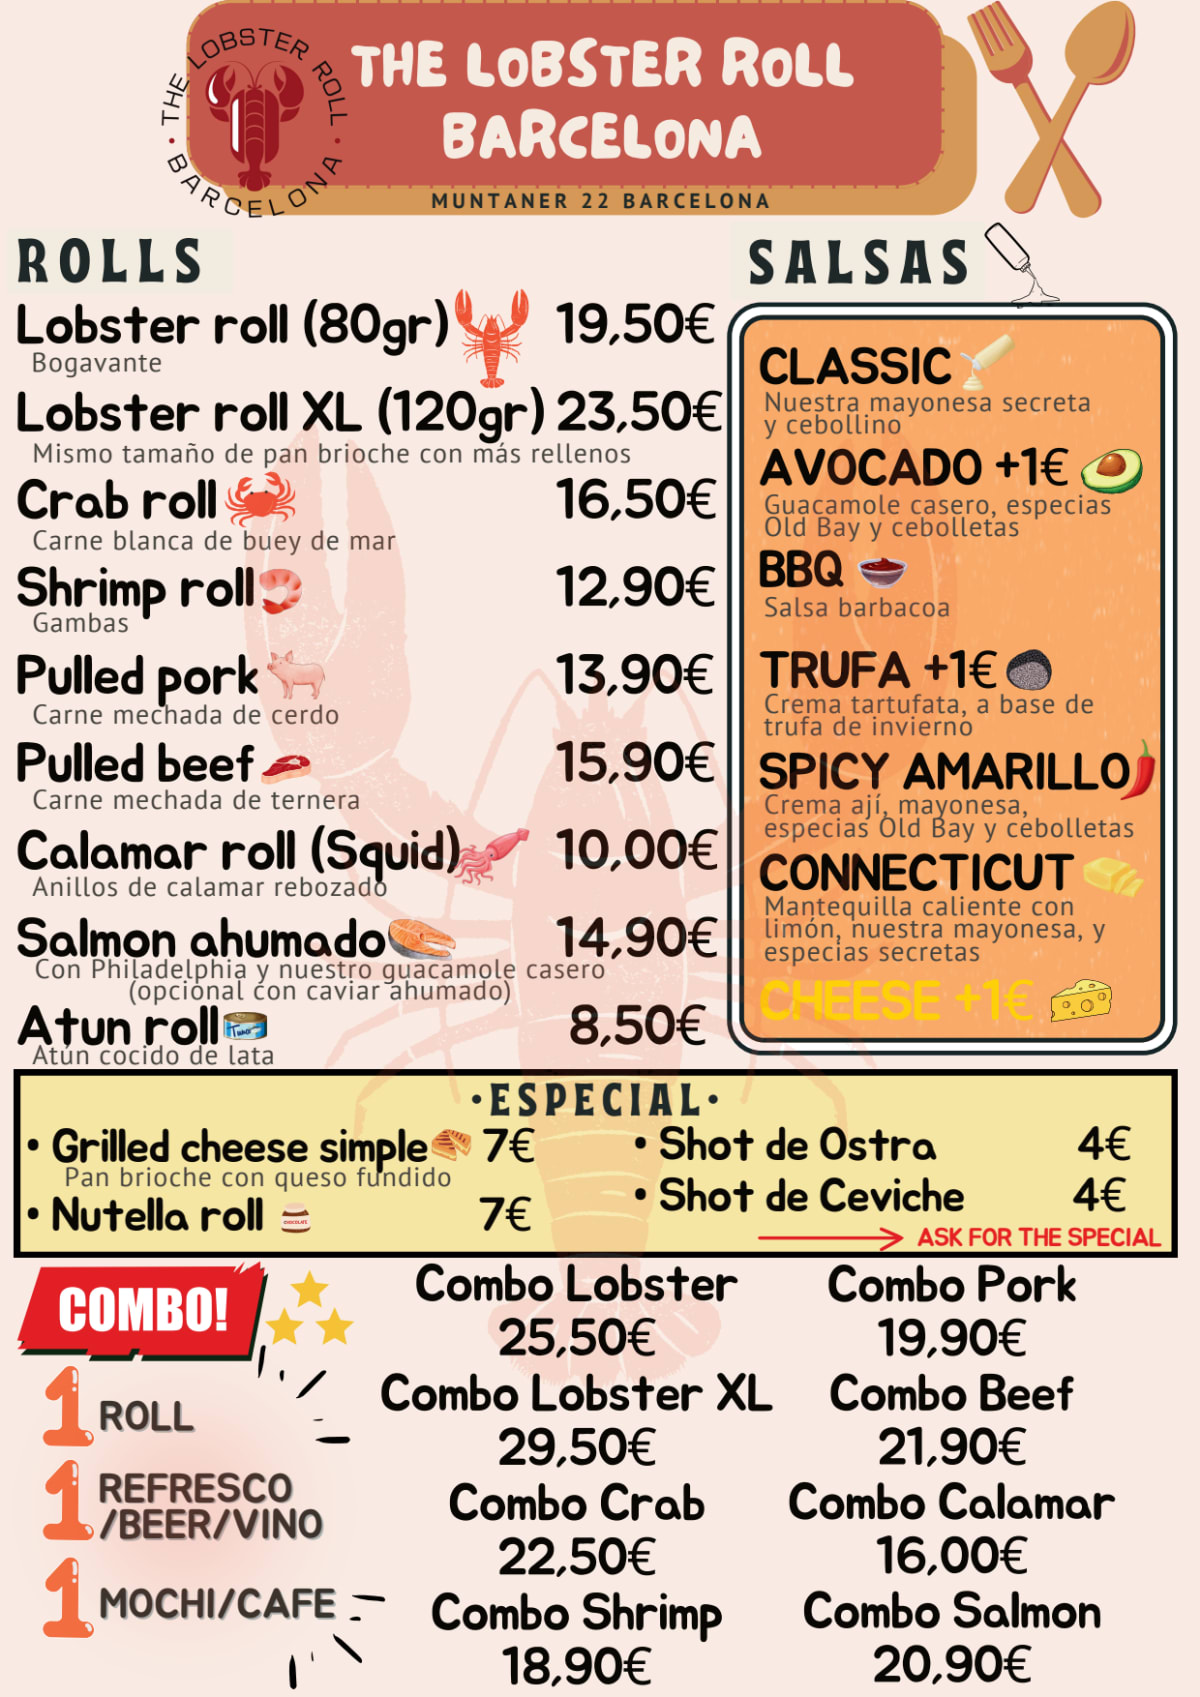 The Lobster Roll Barcelona menu